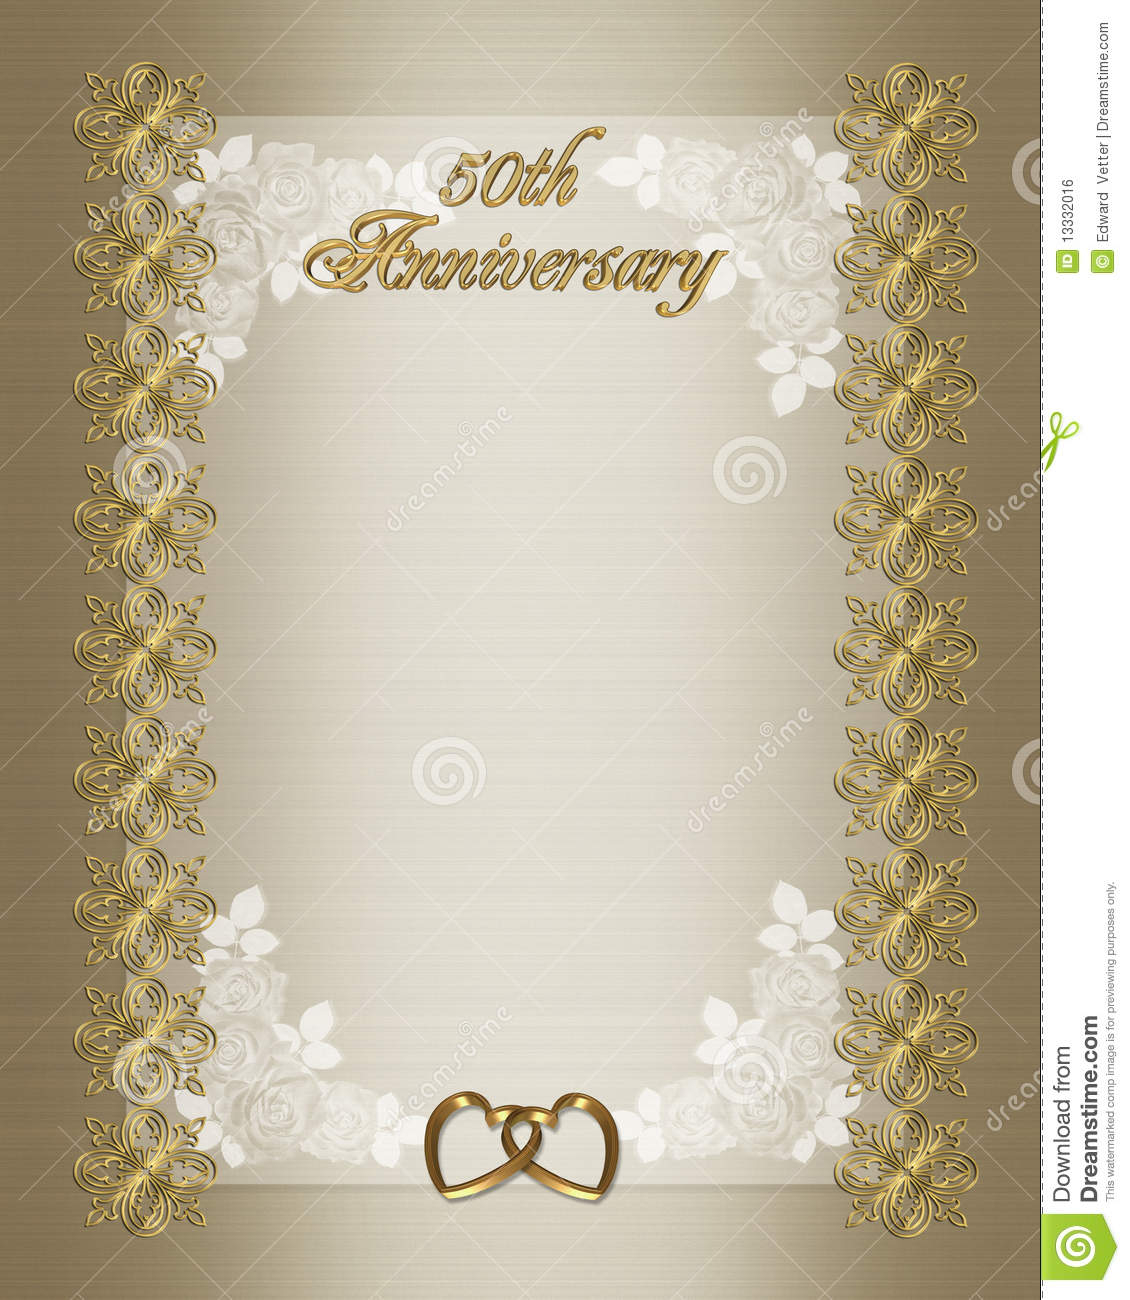 50th Wedding Anniversary Invitation Template Stock Illustration within sizing 1130 X 1300